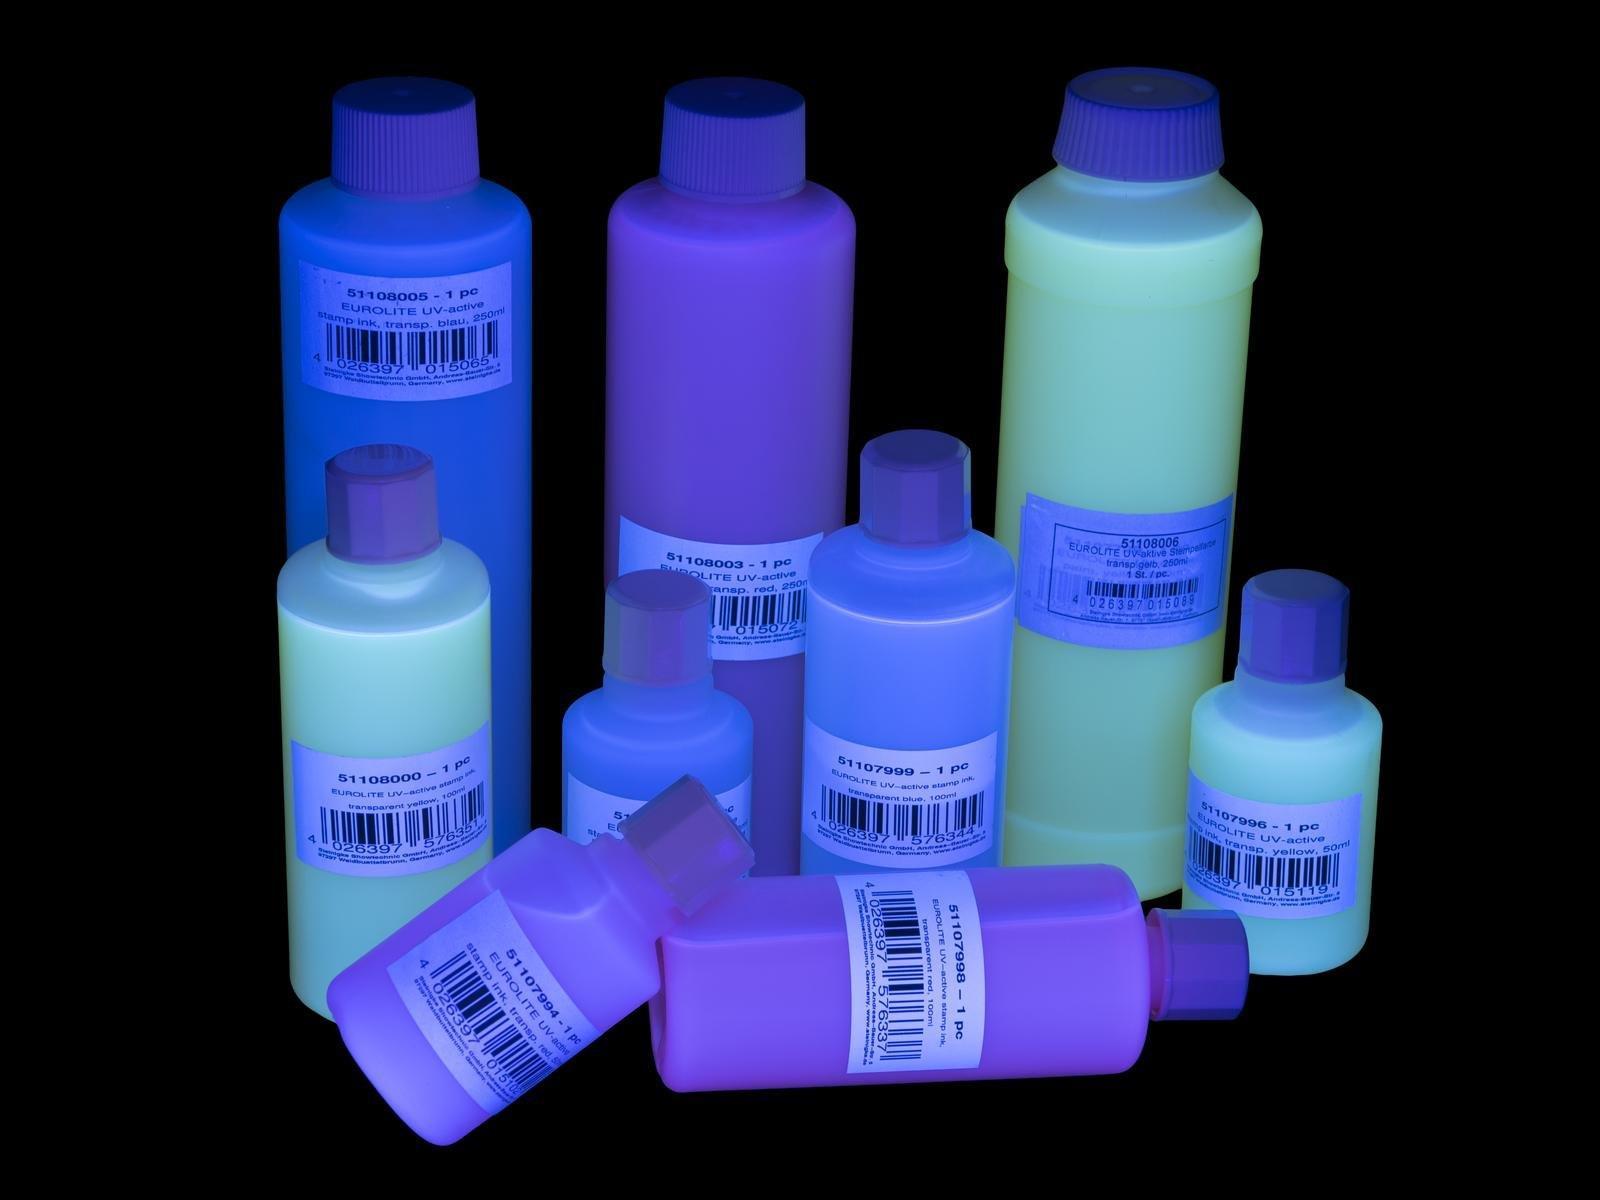 Eurolite Schwarzlicht-, UV- Leuchtfarben UV-aktive Stempelfarbe, transp.blau,250ml 51108005 Transparent-Blau 1 St. (51108005) von Eurolite